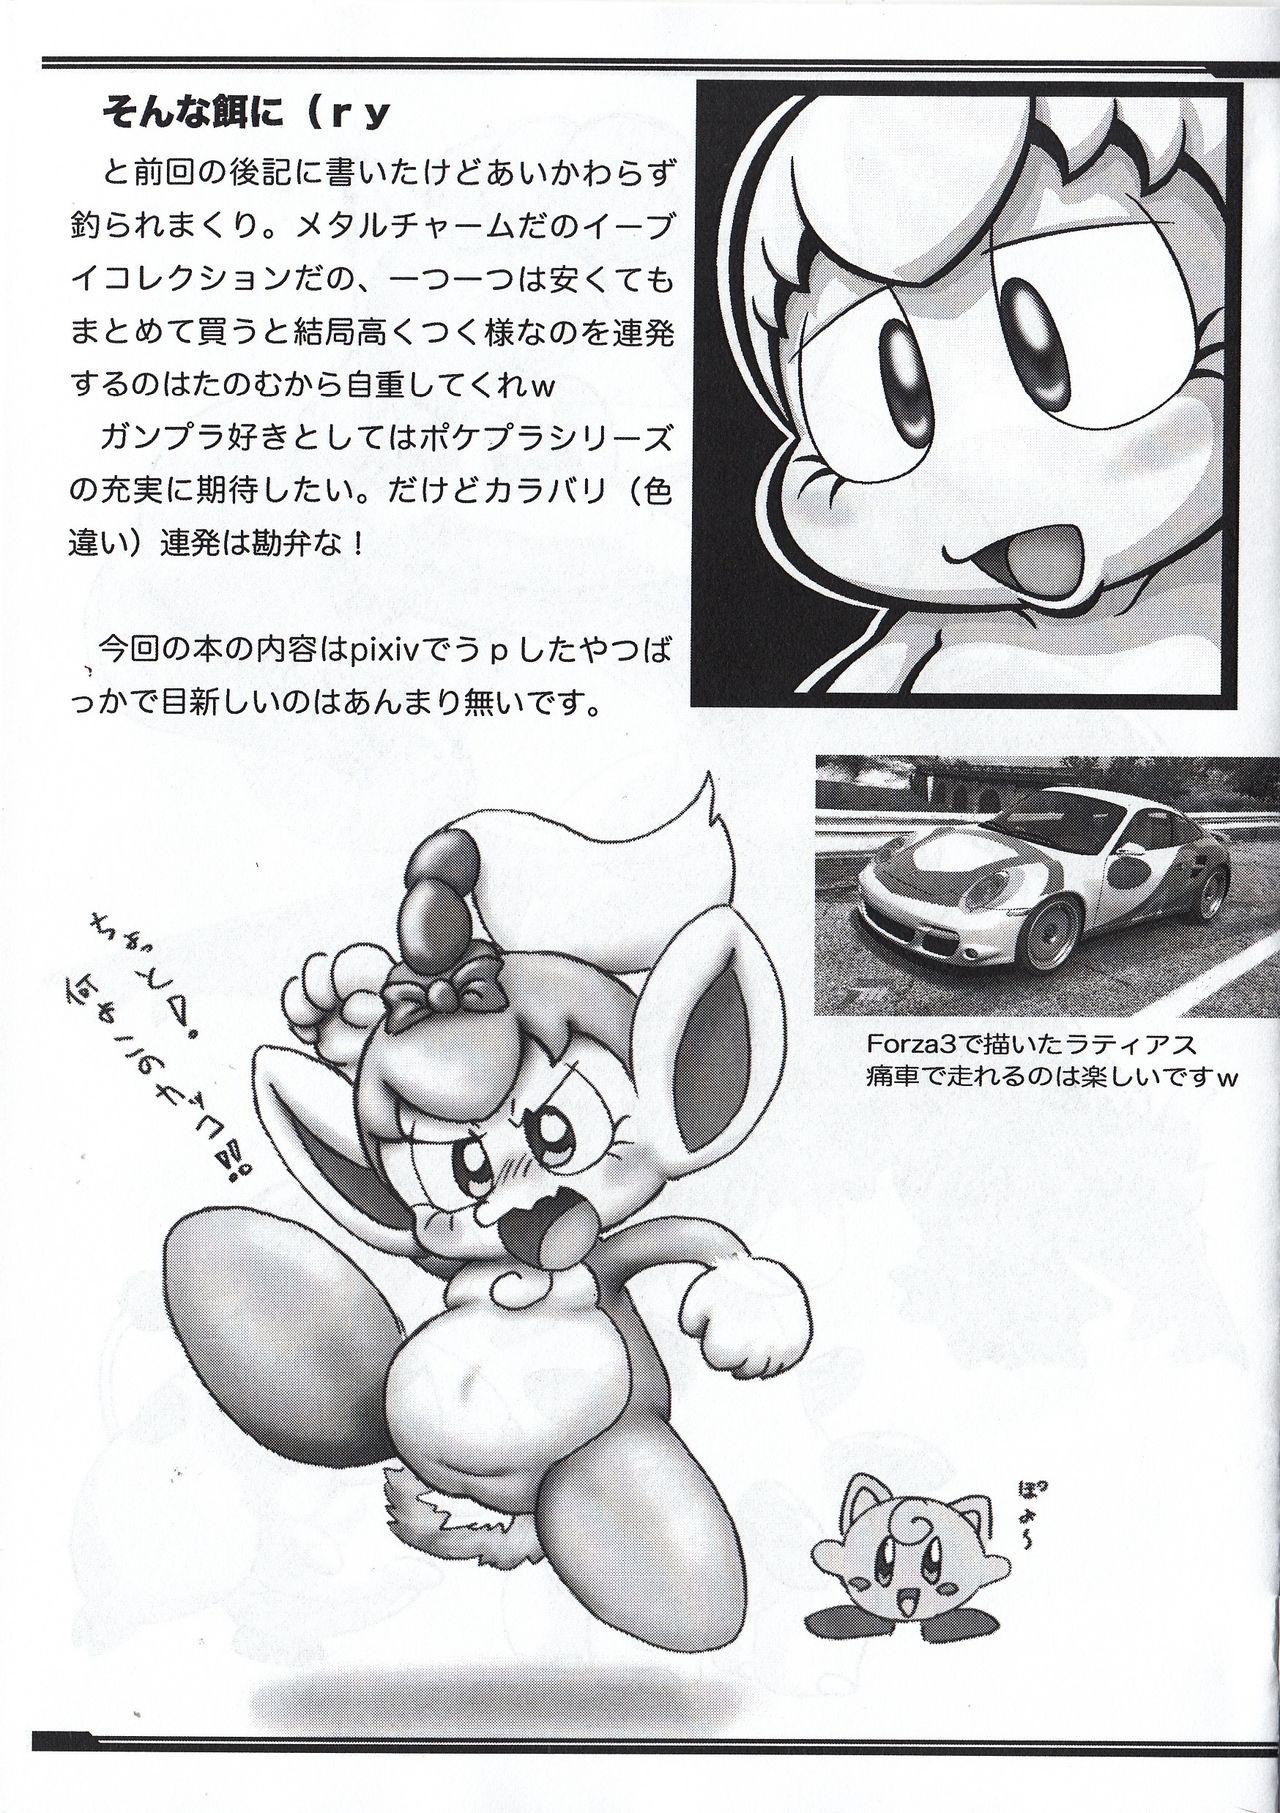 Russian P-Kemo09 - Pokemon Kirby Animal crossing Gloryhole - Page 2